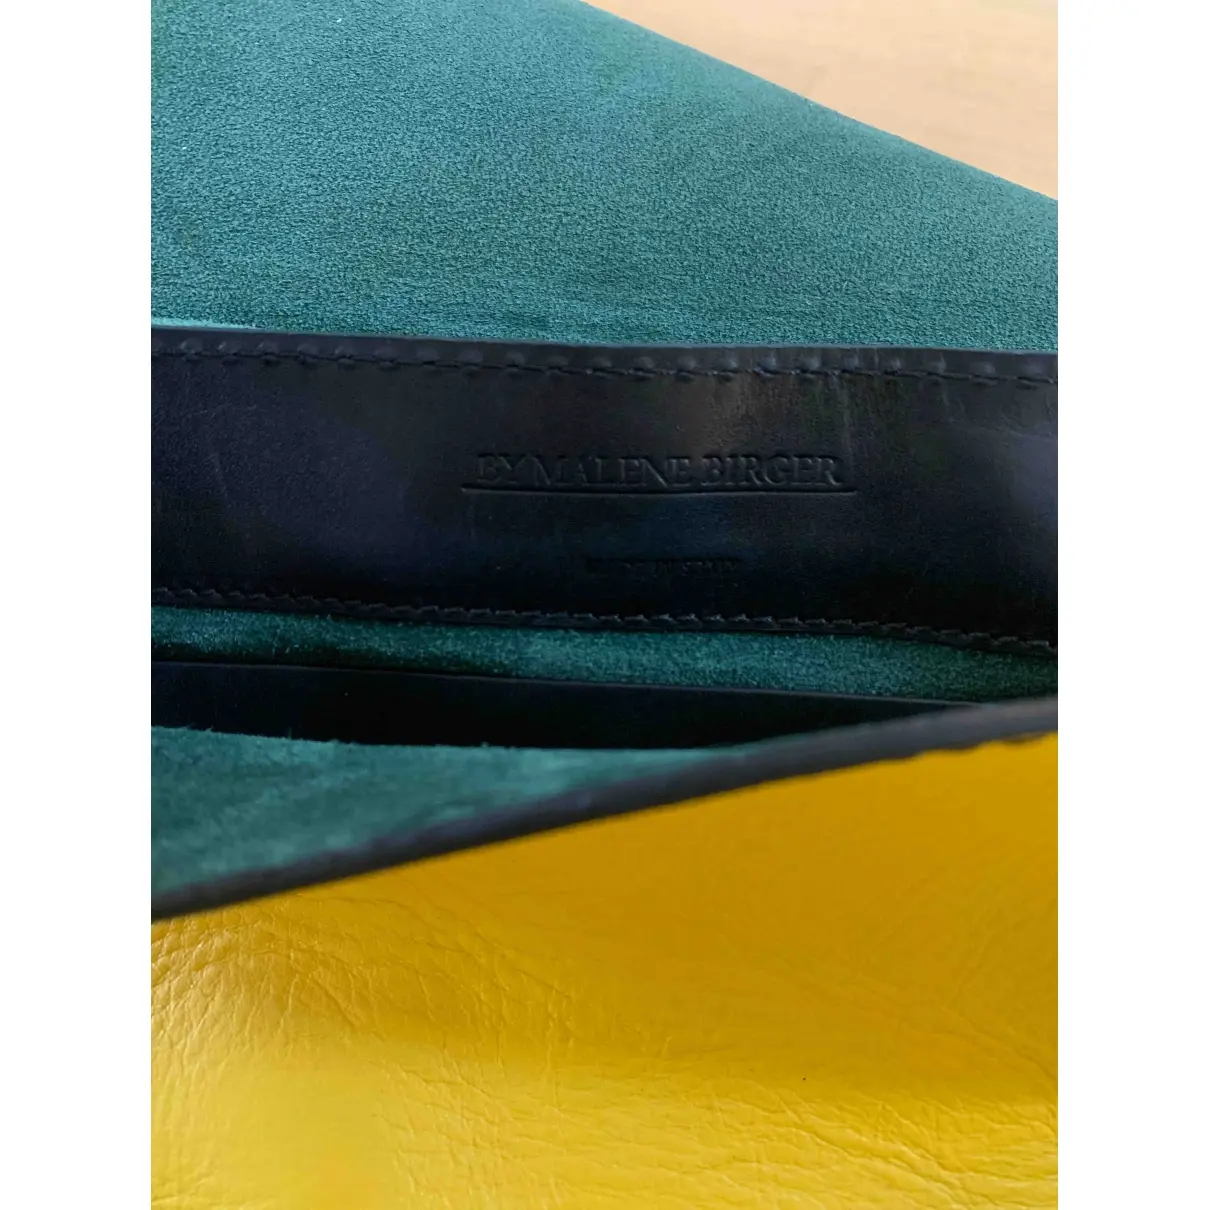 Buy by Malene Birger Leather clutch bag online